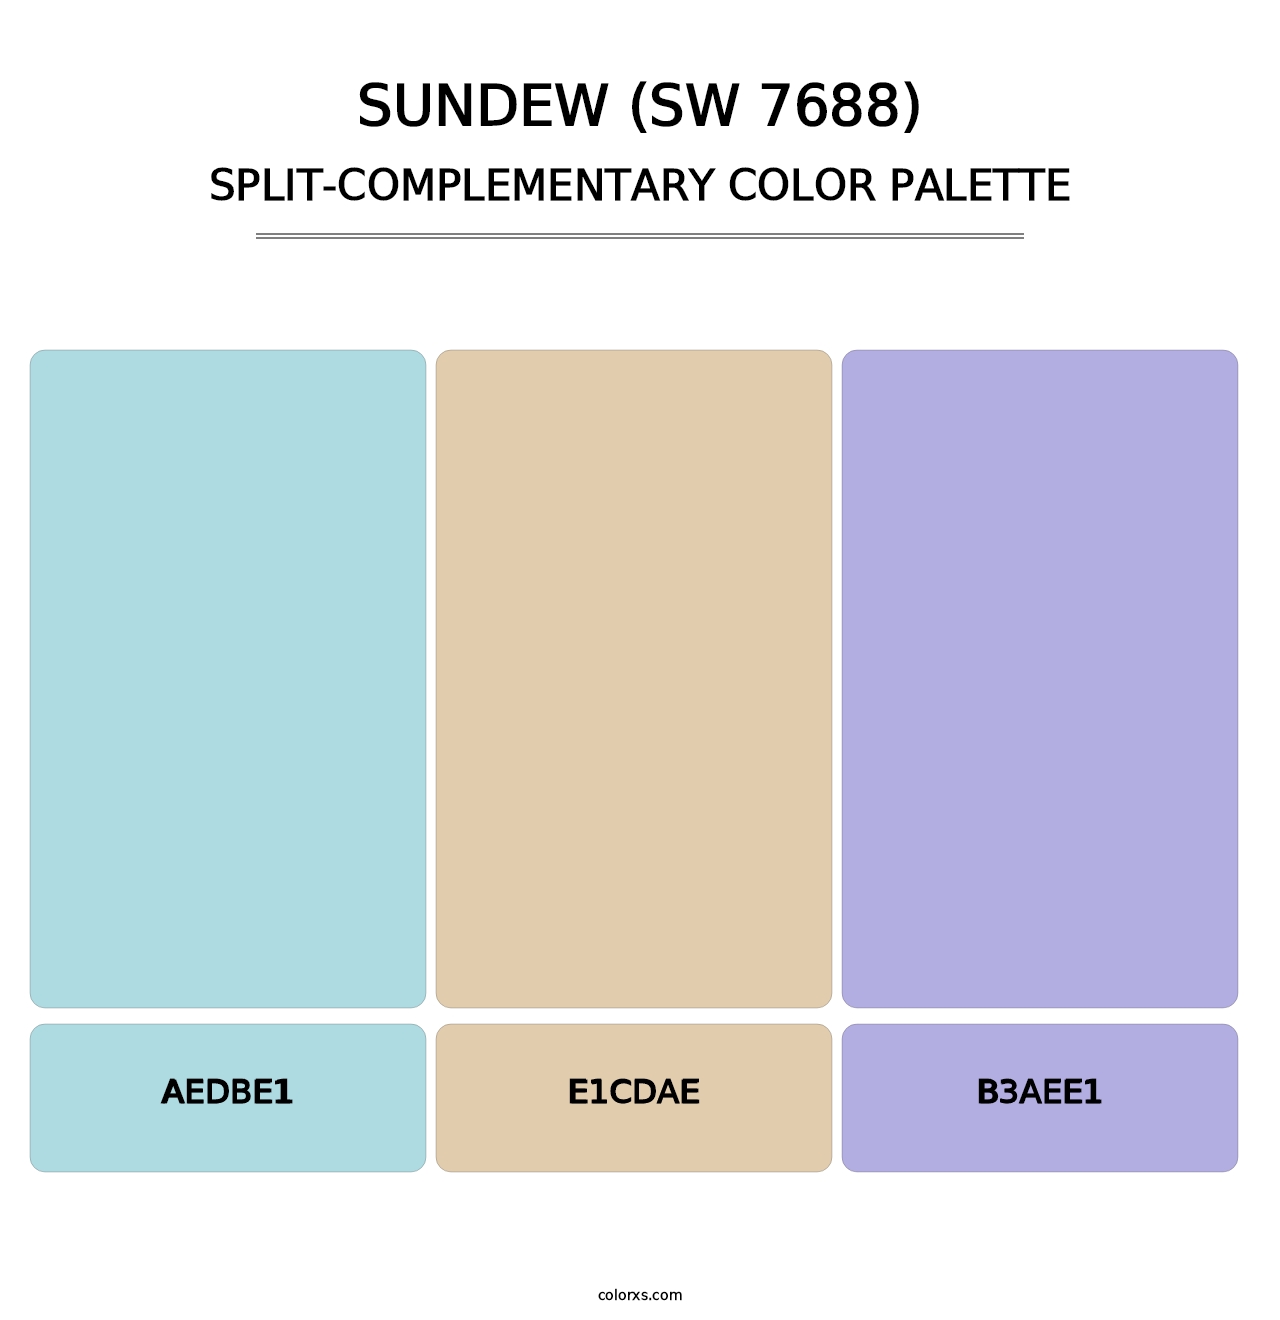 Sundew (SW 7688) - Split-Complementary Color Palette